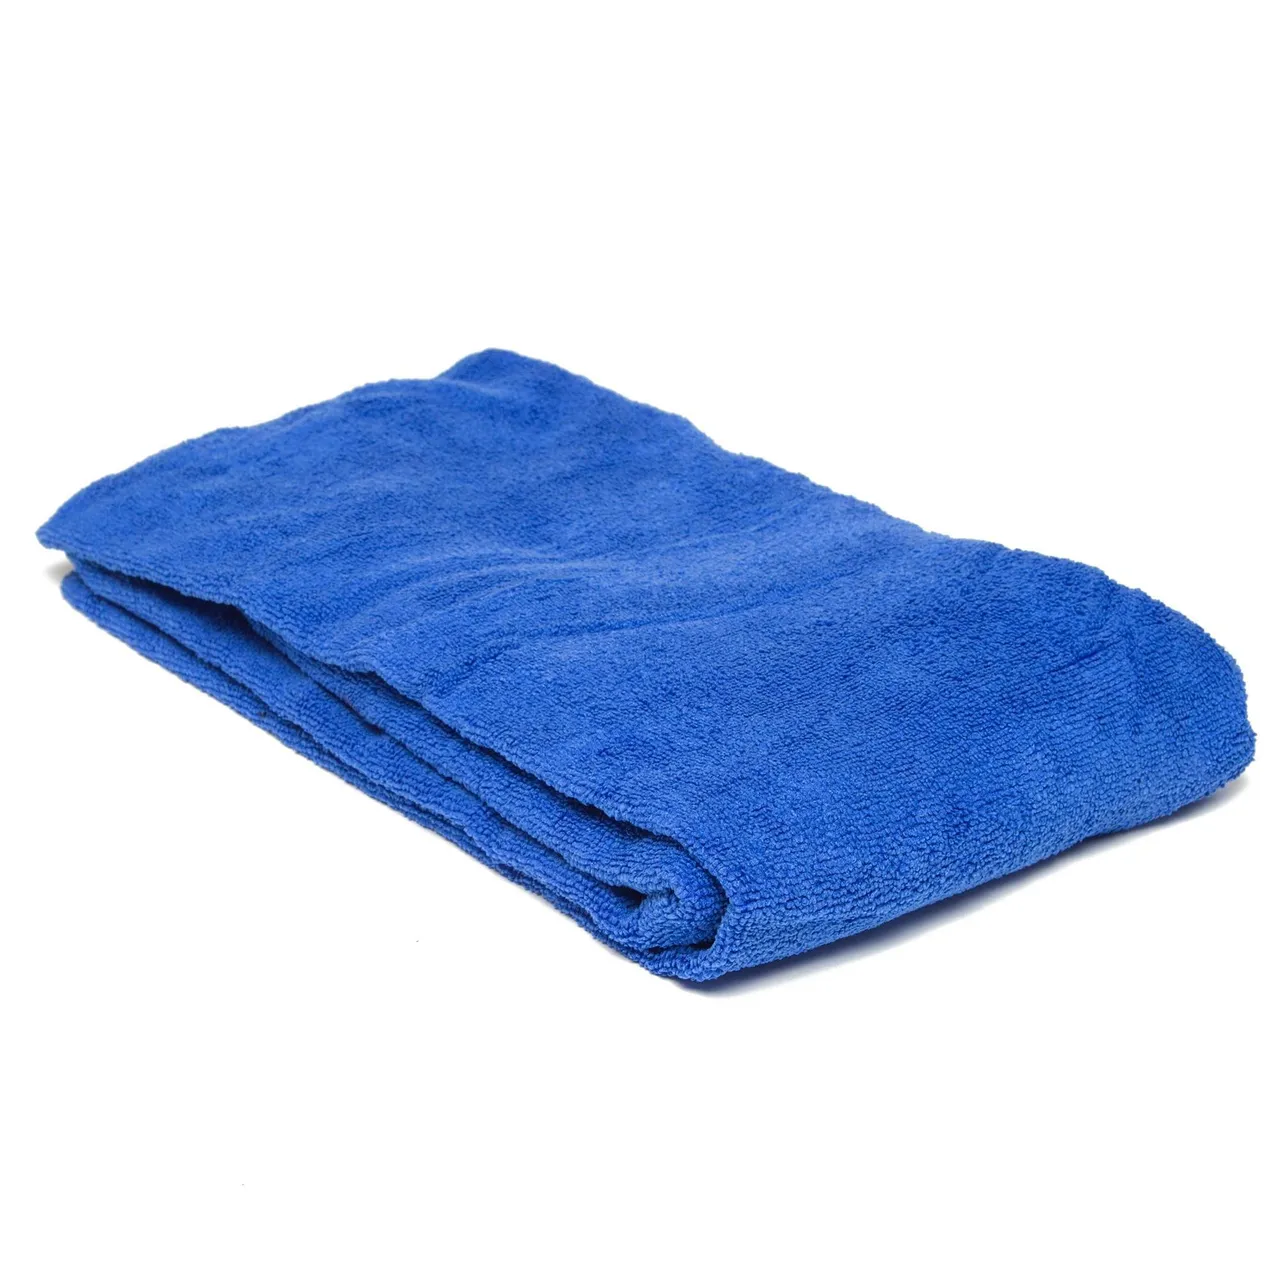 Terry Microfibre Travel Towel - Small - Blue, Blue